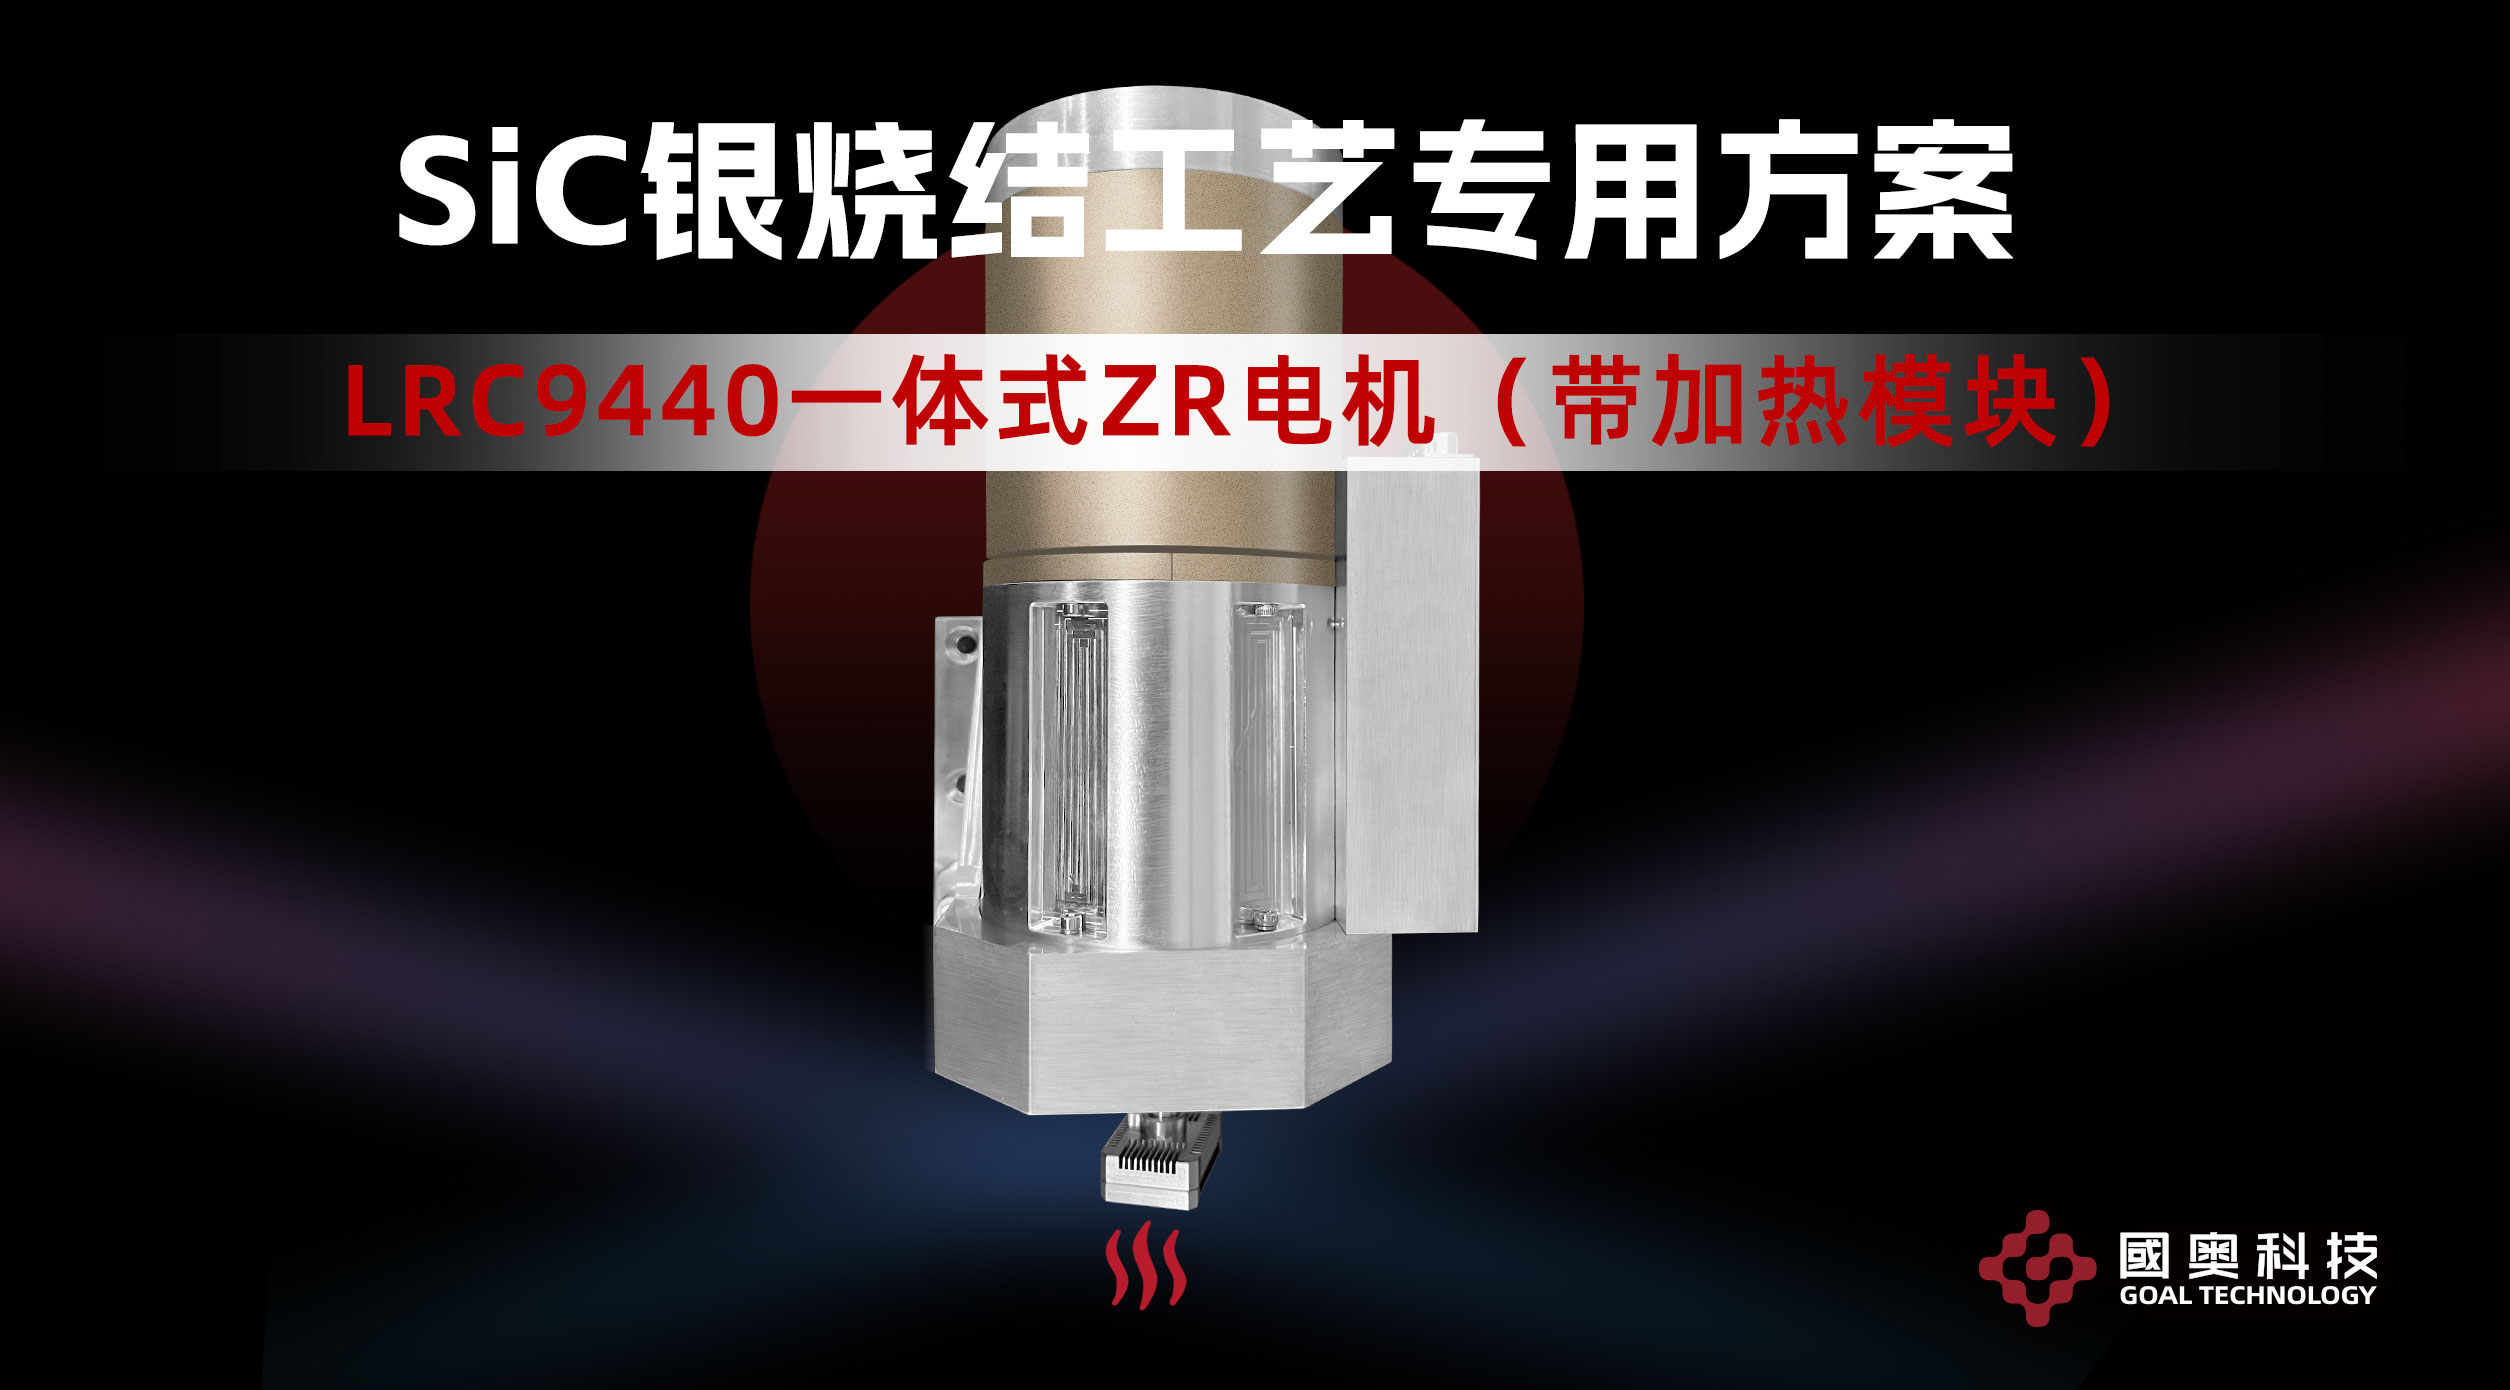 SiC銀燒結設備專用方案——國奧科技LRC9440一體式ZR電機（帶加熱模塊）。#SiC封測設備


 